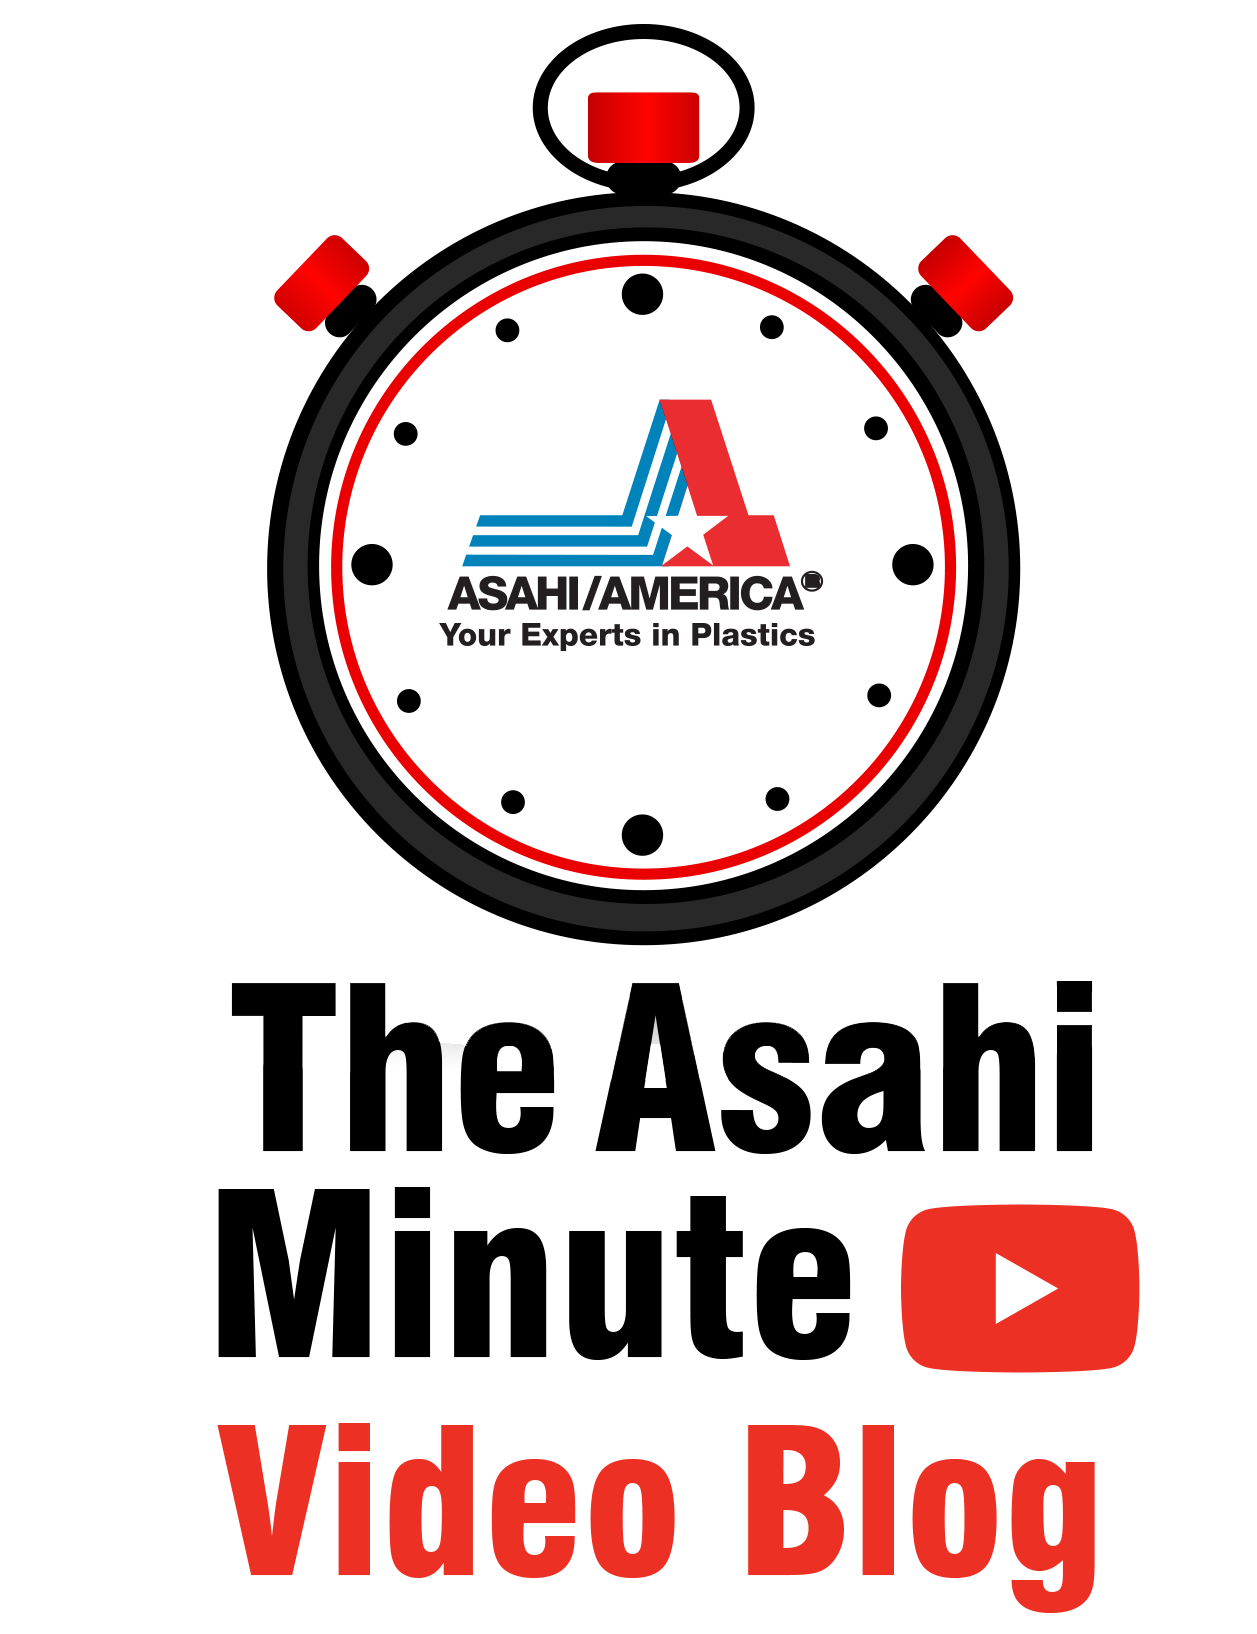 Video Blog Logo V2